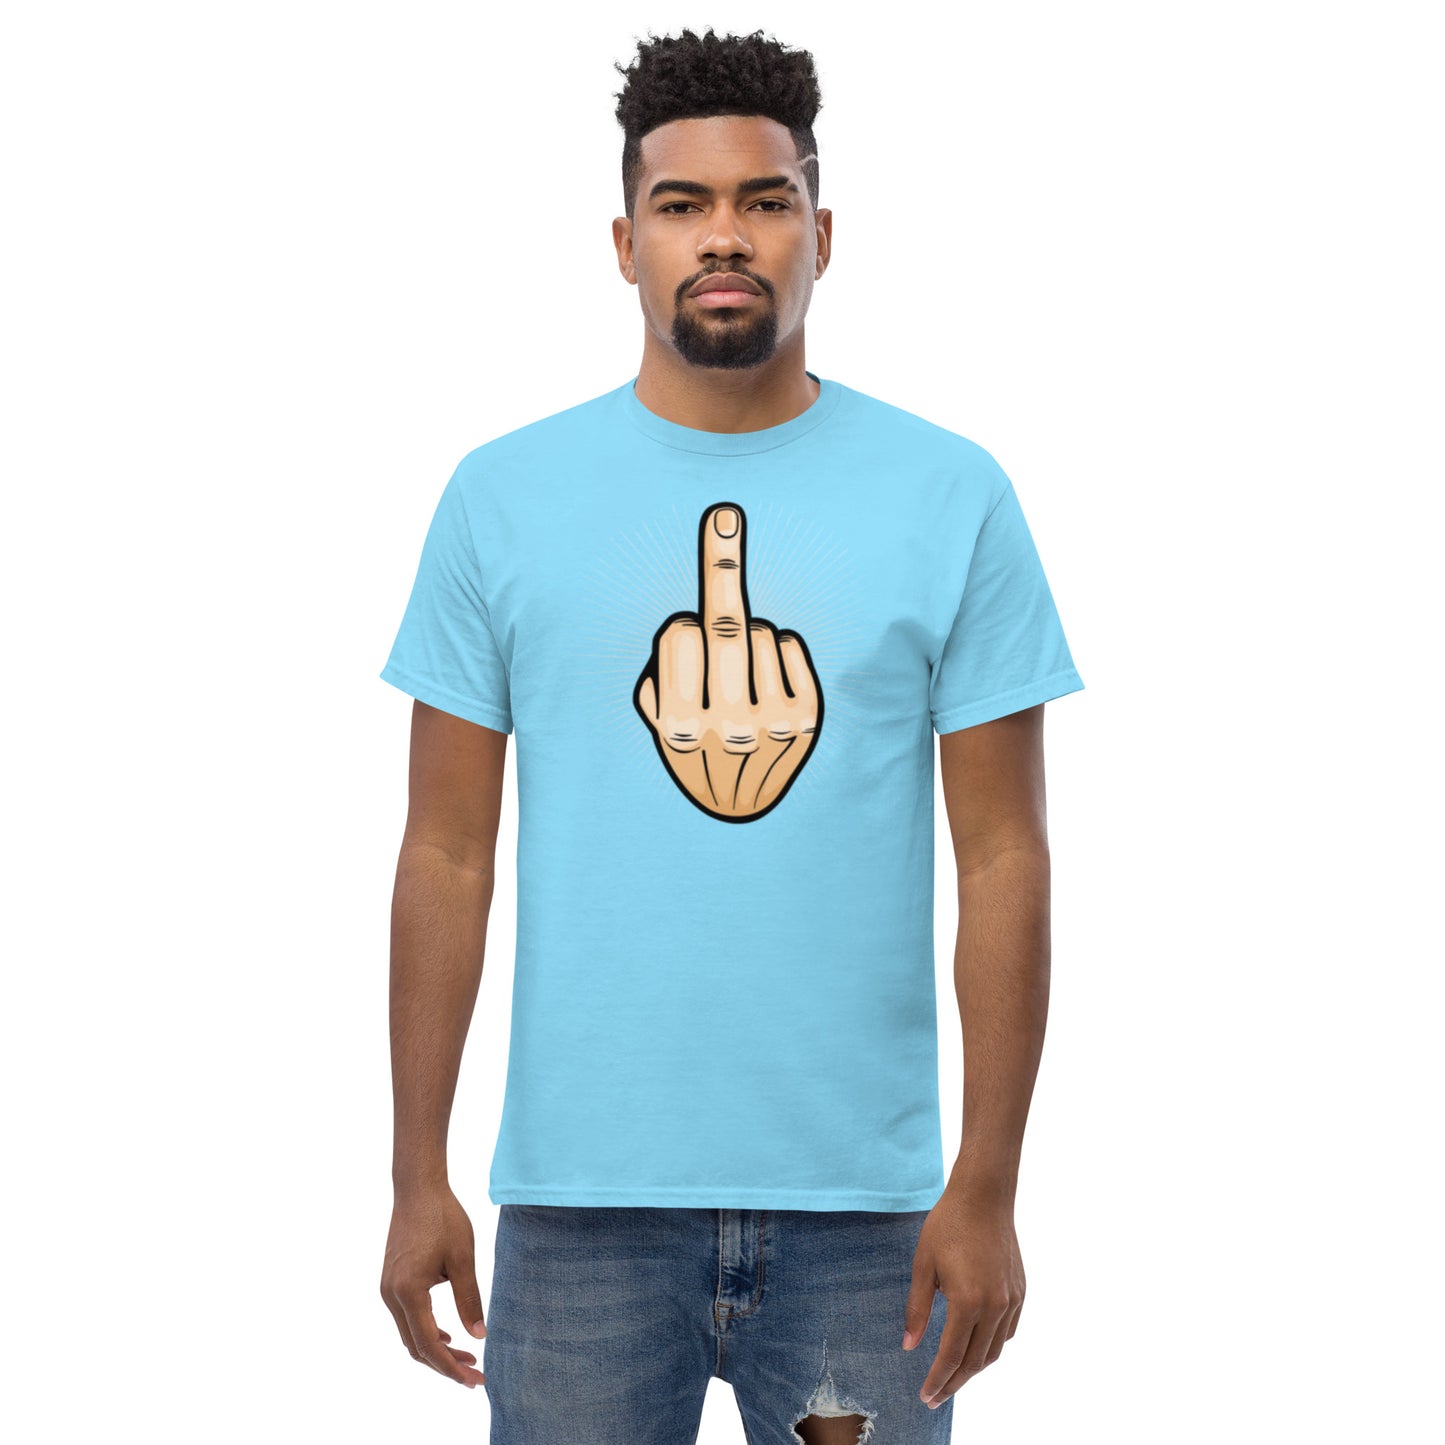 "Middle finger" men's t-shirt